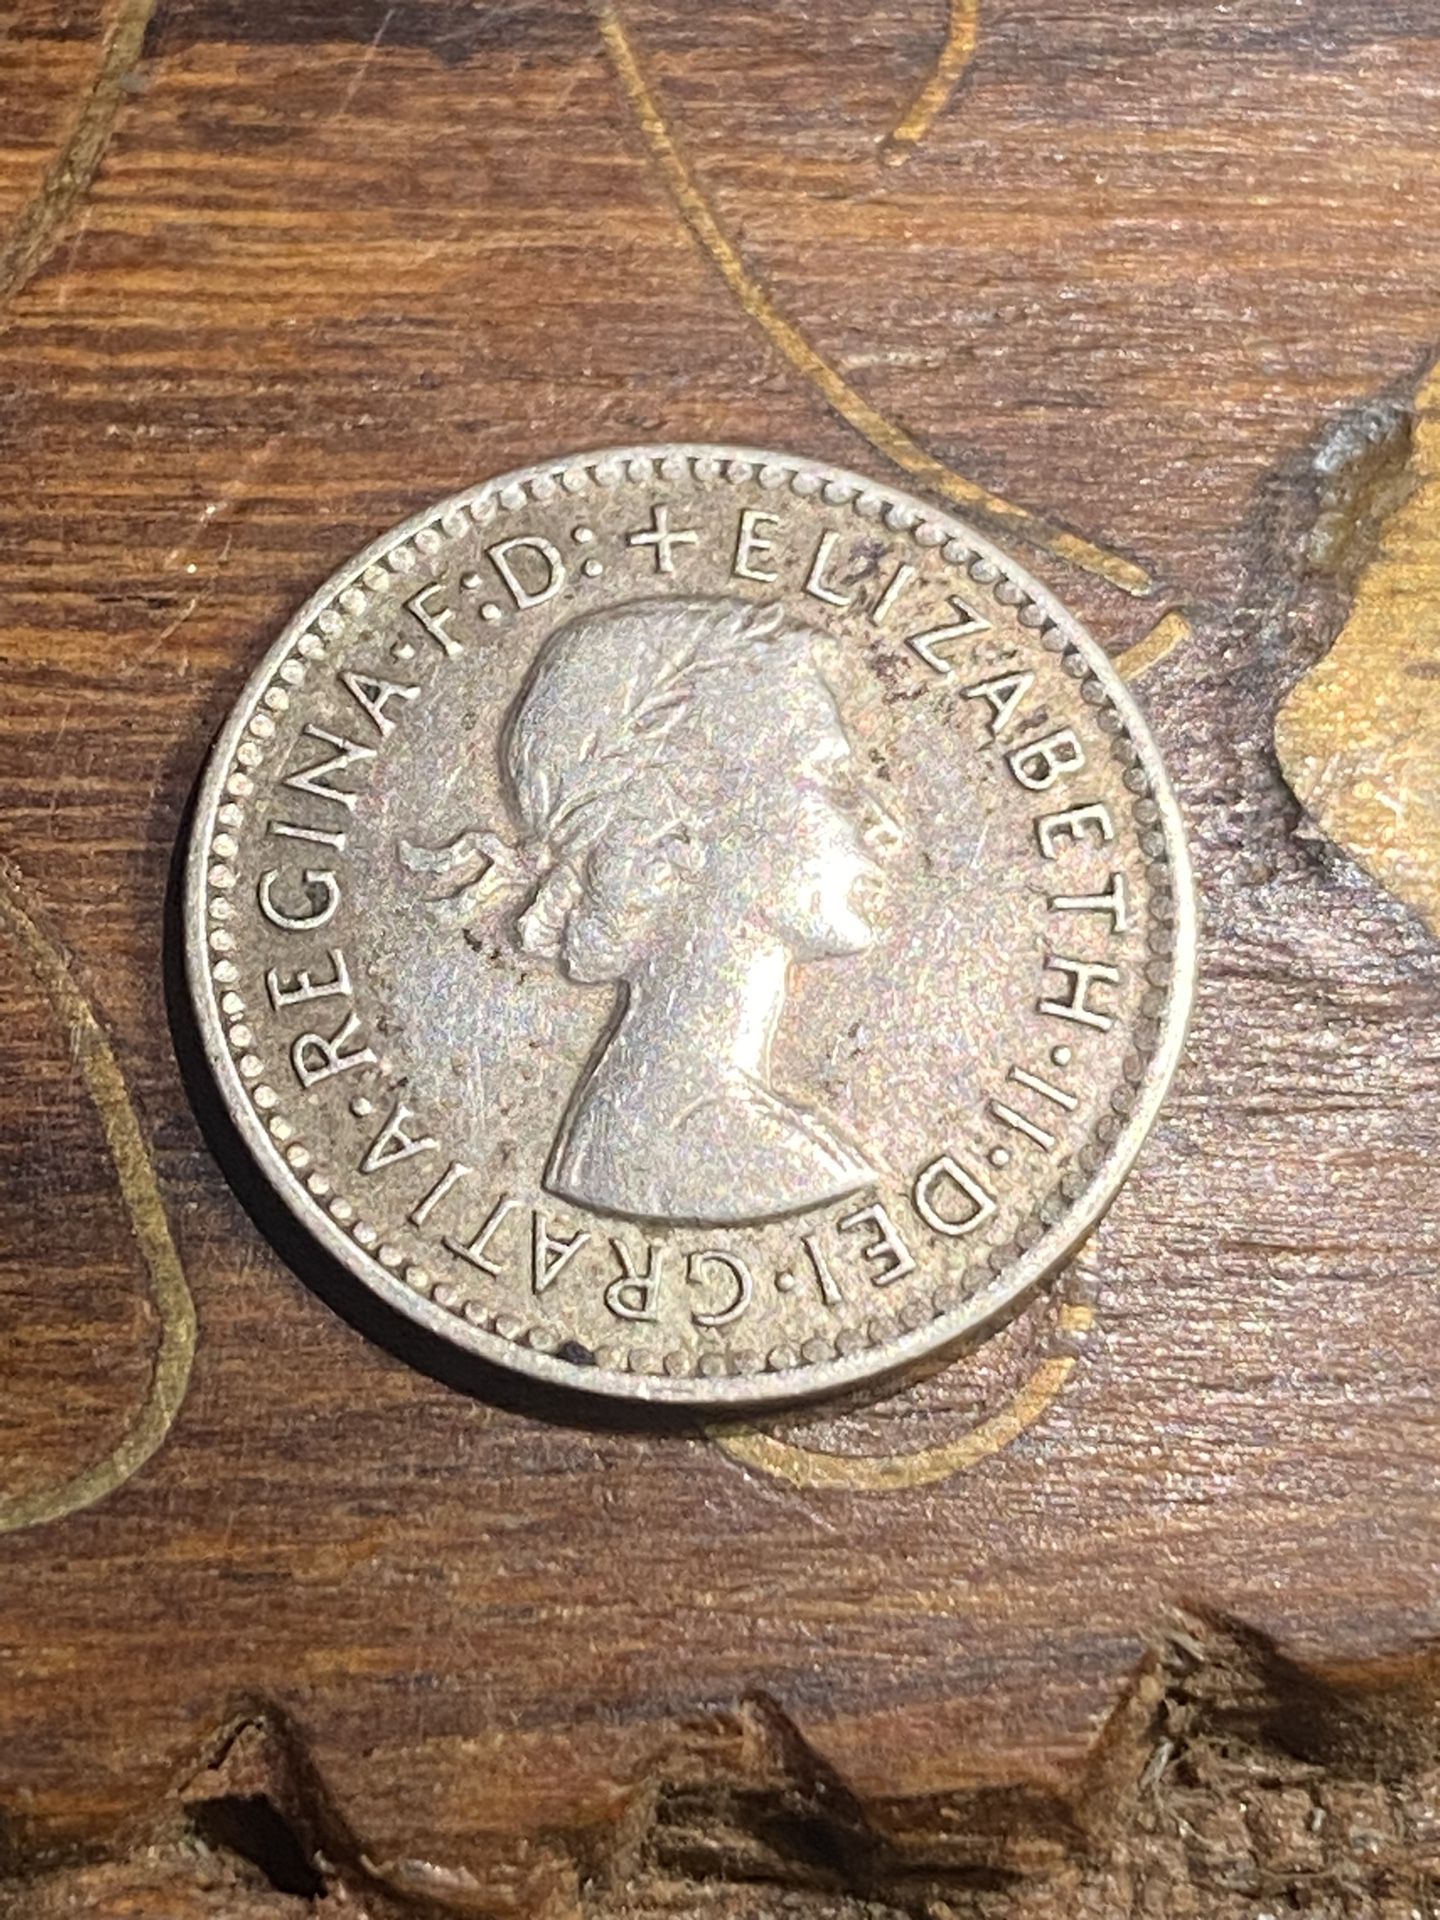 I 1956 Australia Threepence Silver Coin 3 Pence Circulated You Grade Elizabeth II